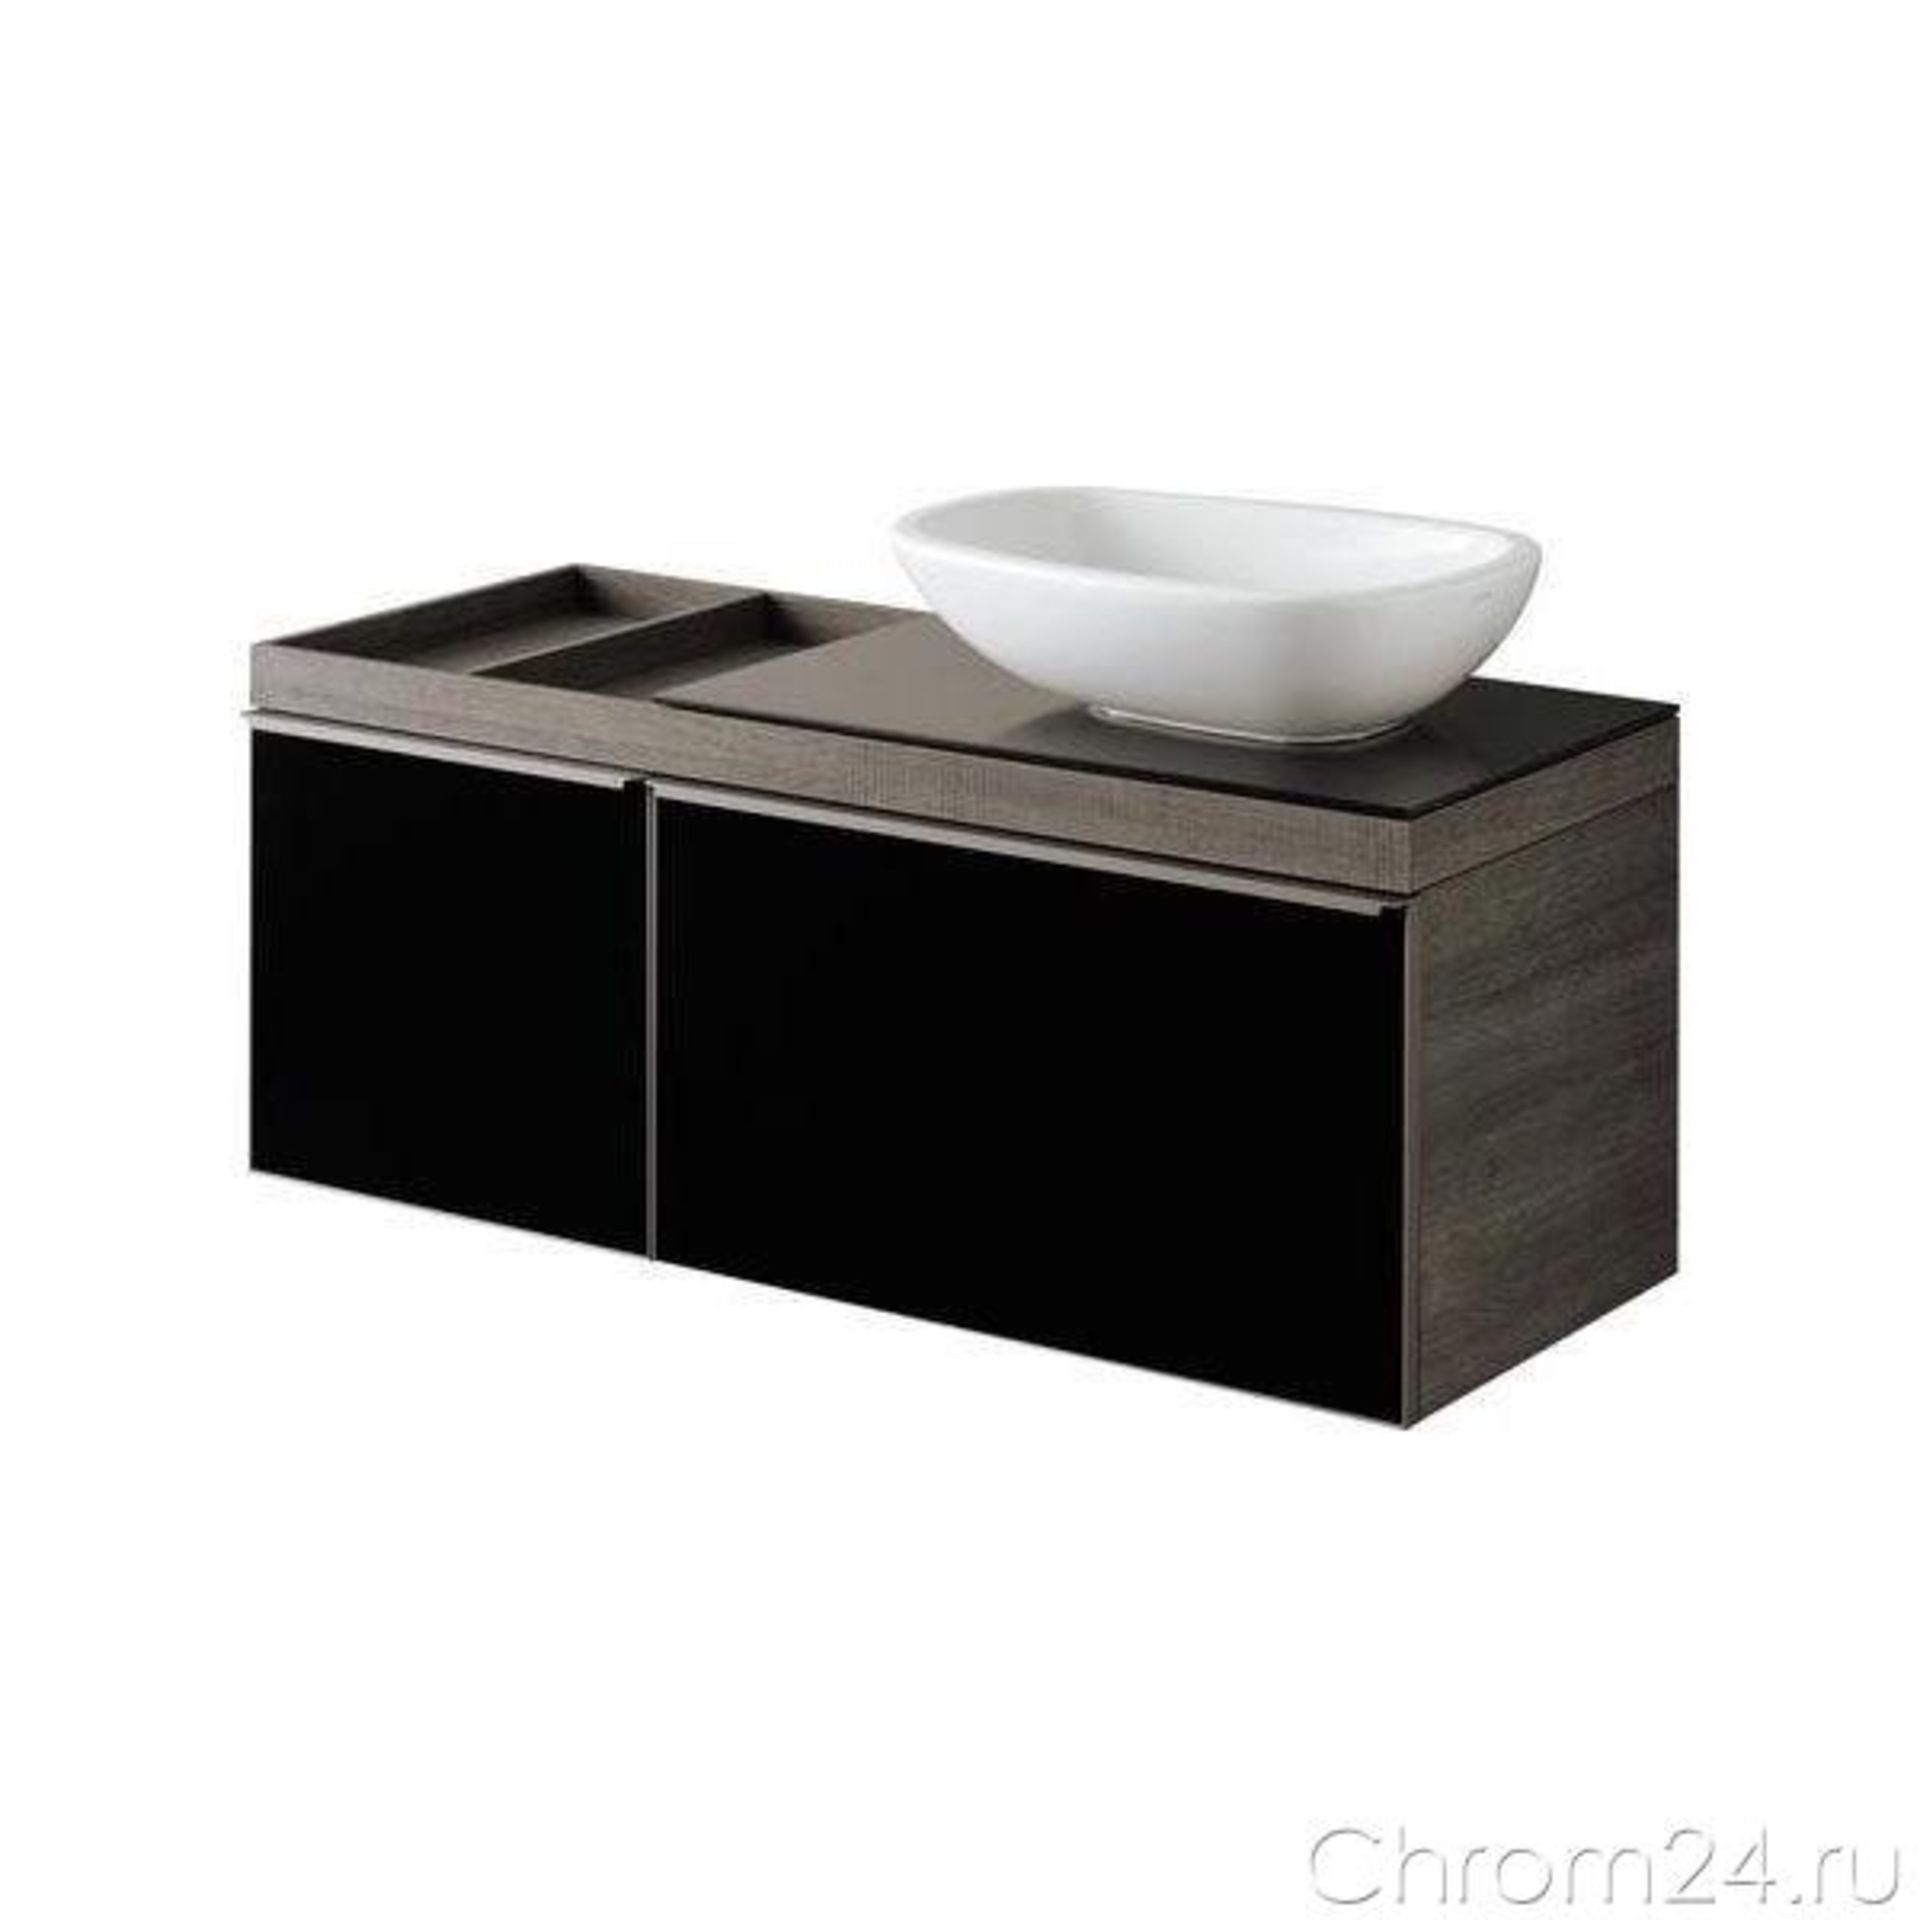 New Keramag Citterio Washbasin Cabinet 1184 x 543 x 504 Dark Oak, Black Glass Front Ref. 835821...